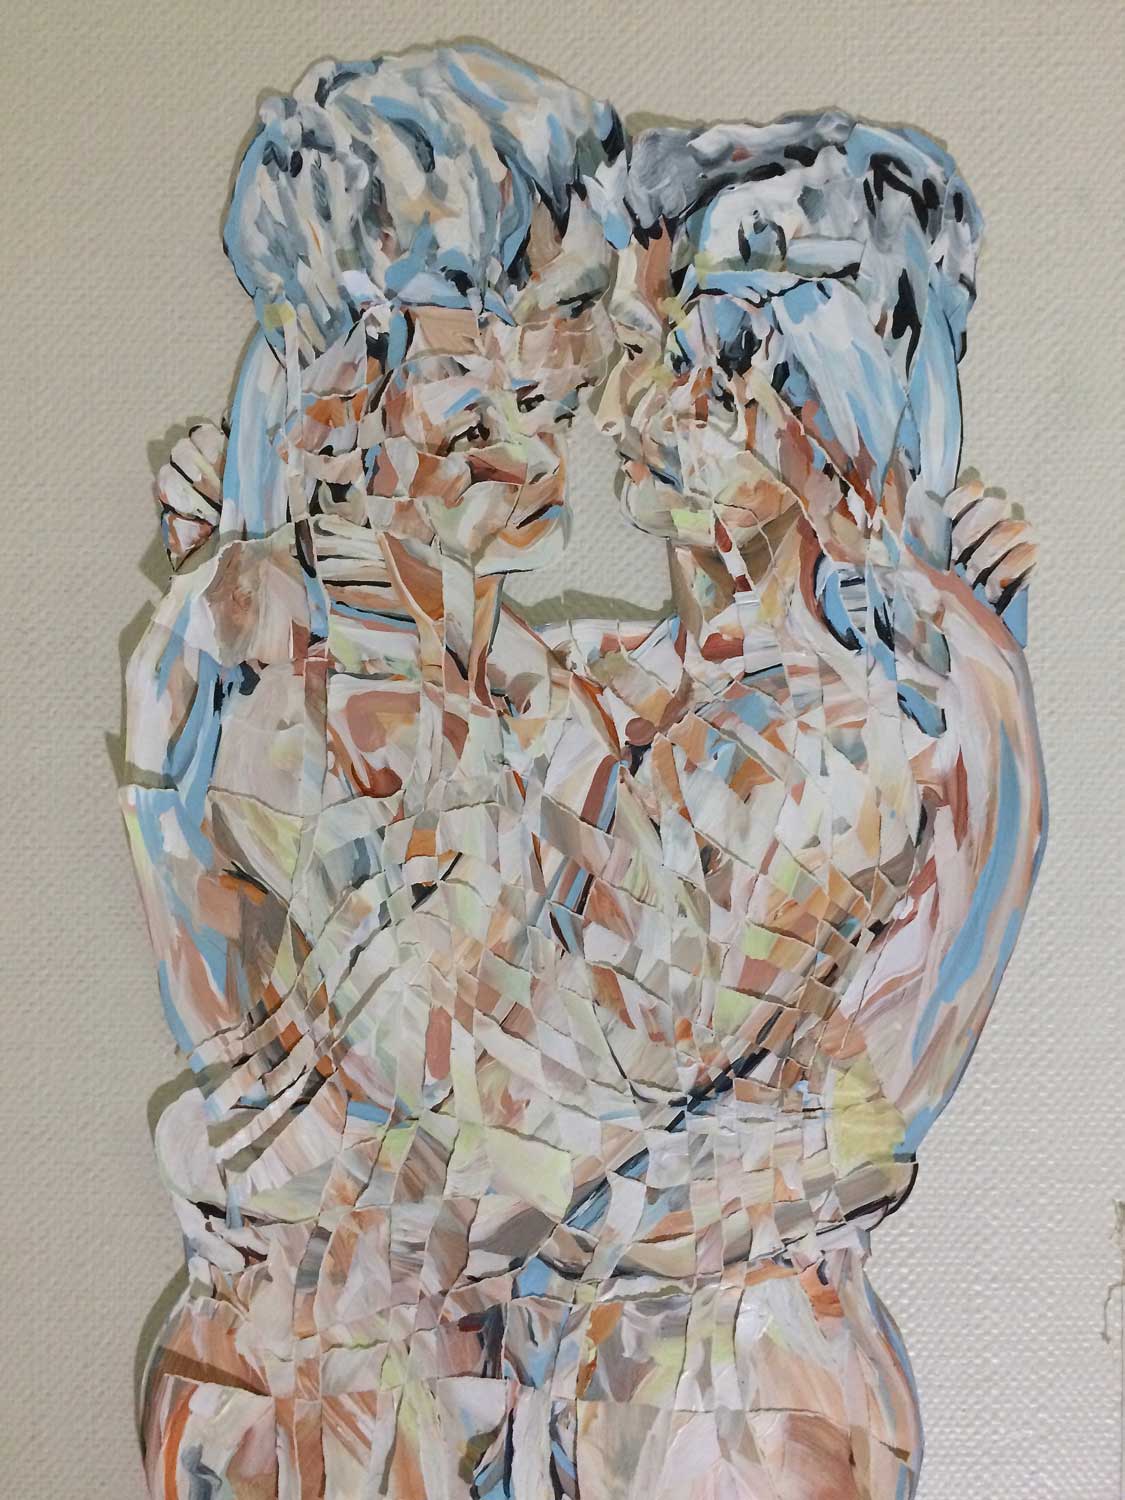 Clement-Denis,-En-amour-toile-VI,-2020,-acrylic-on-braided-paper,-80x60cm